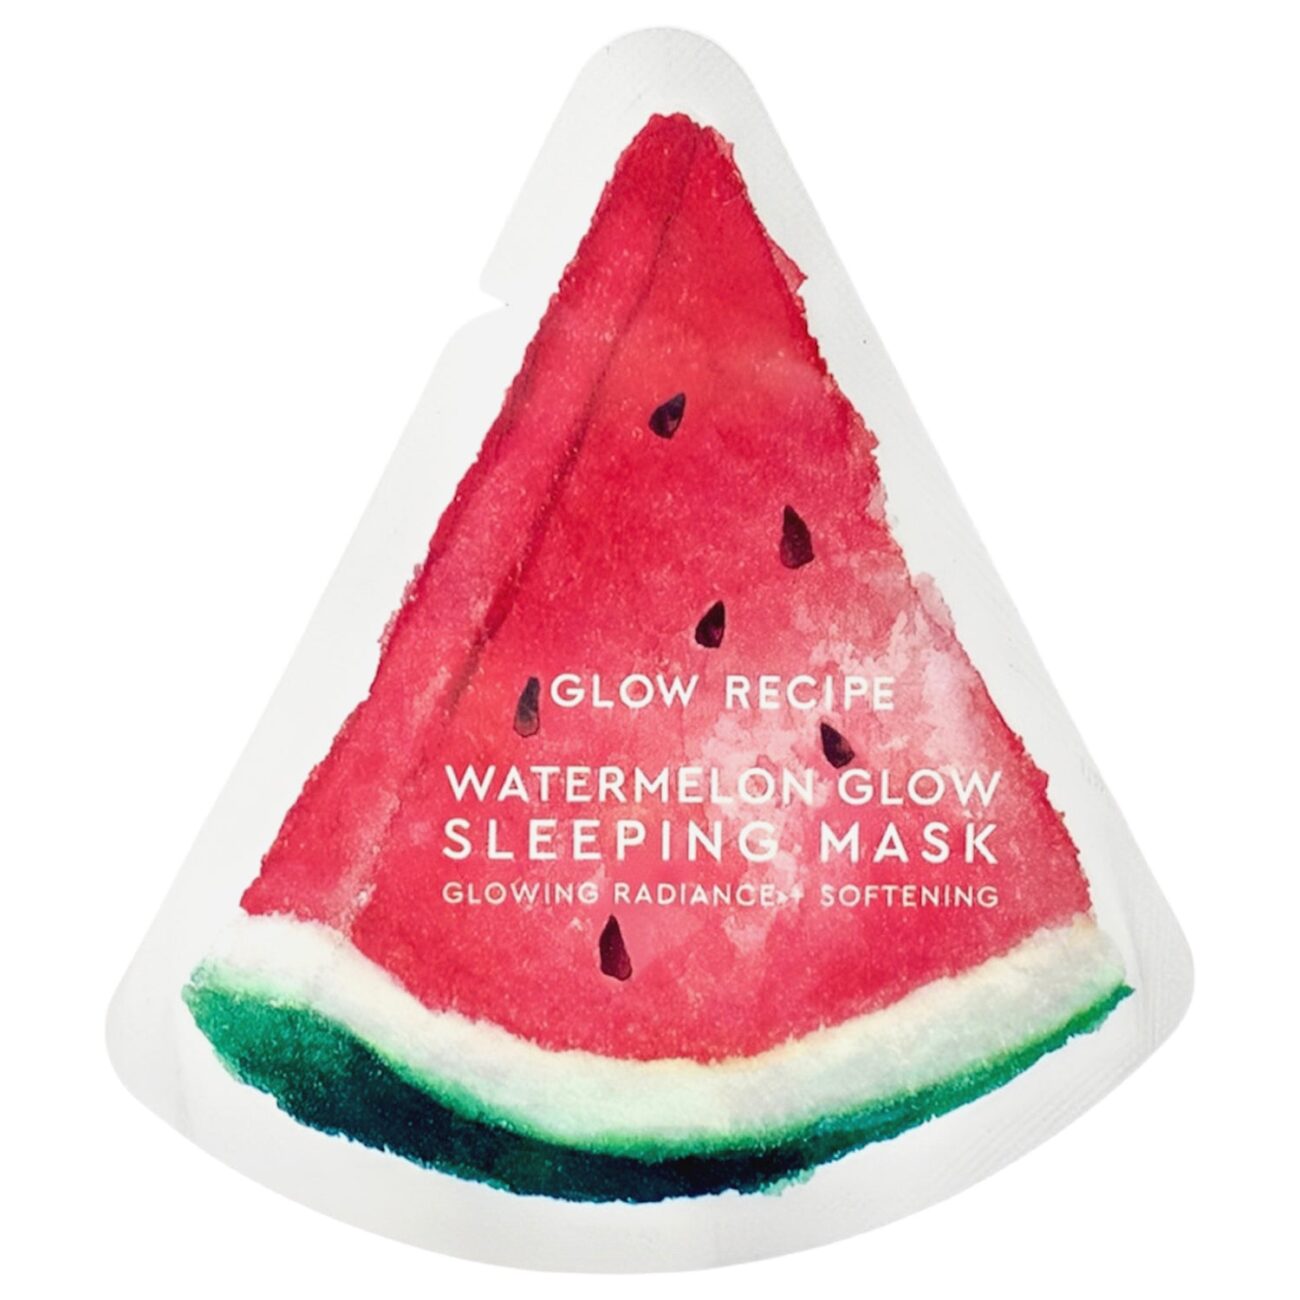 Watermelon Glow Sleeping Mask Sample-Glow Recipe